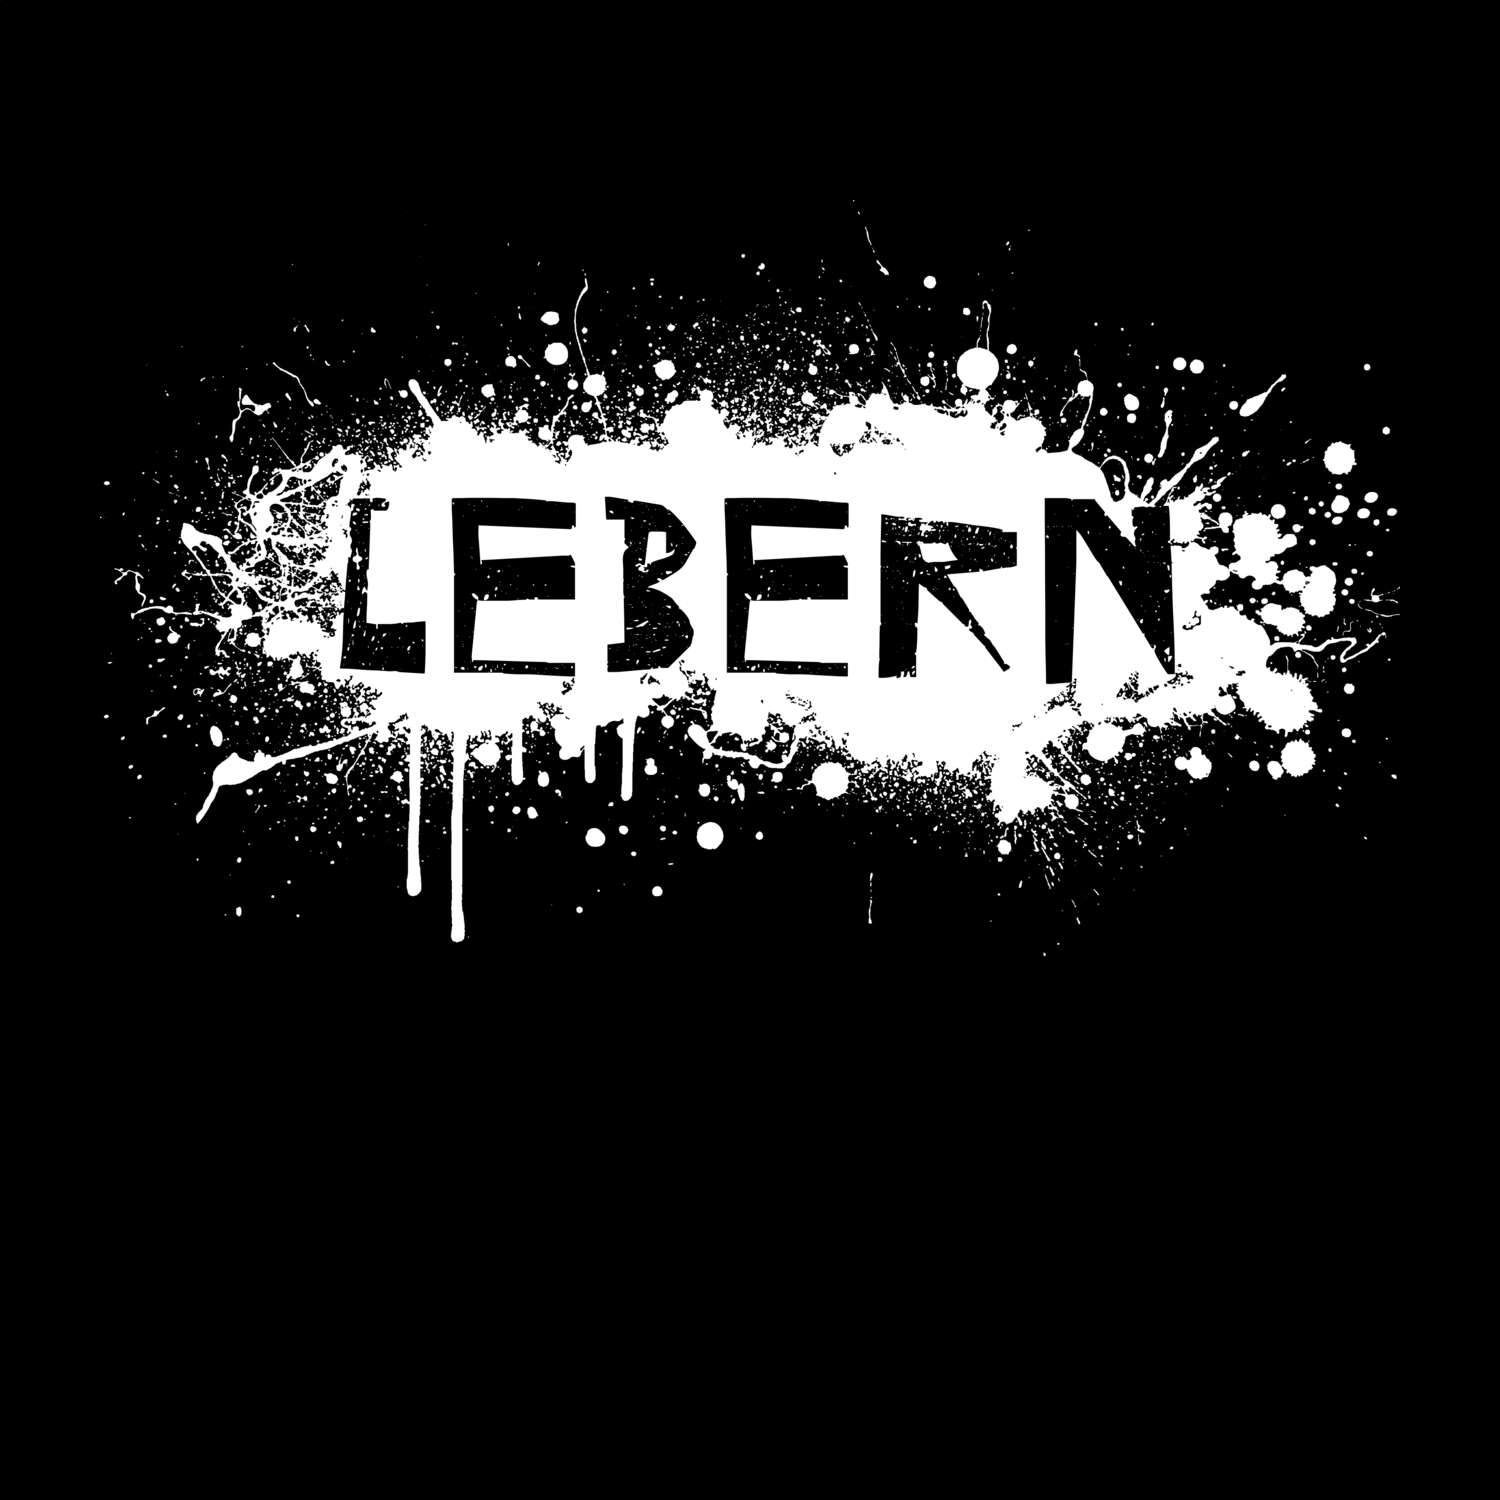 Lebern T-Shirt »Paint Splash Punk«